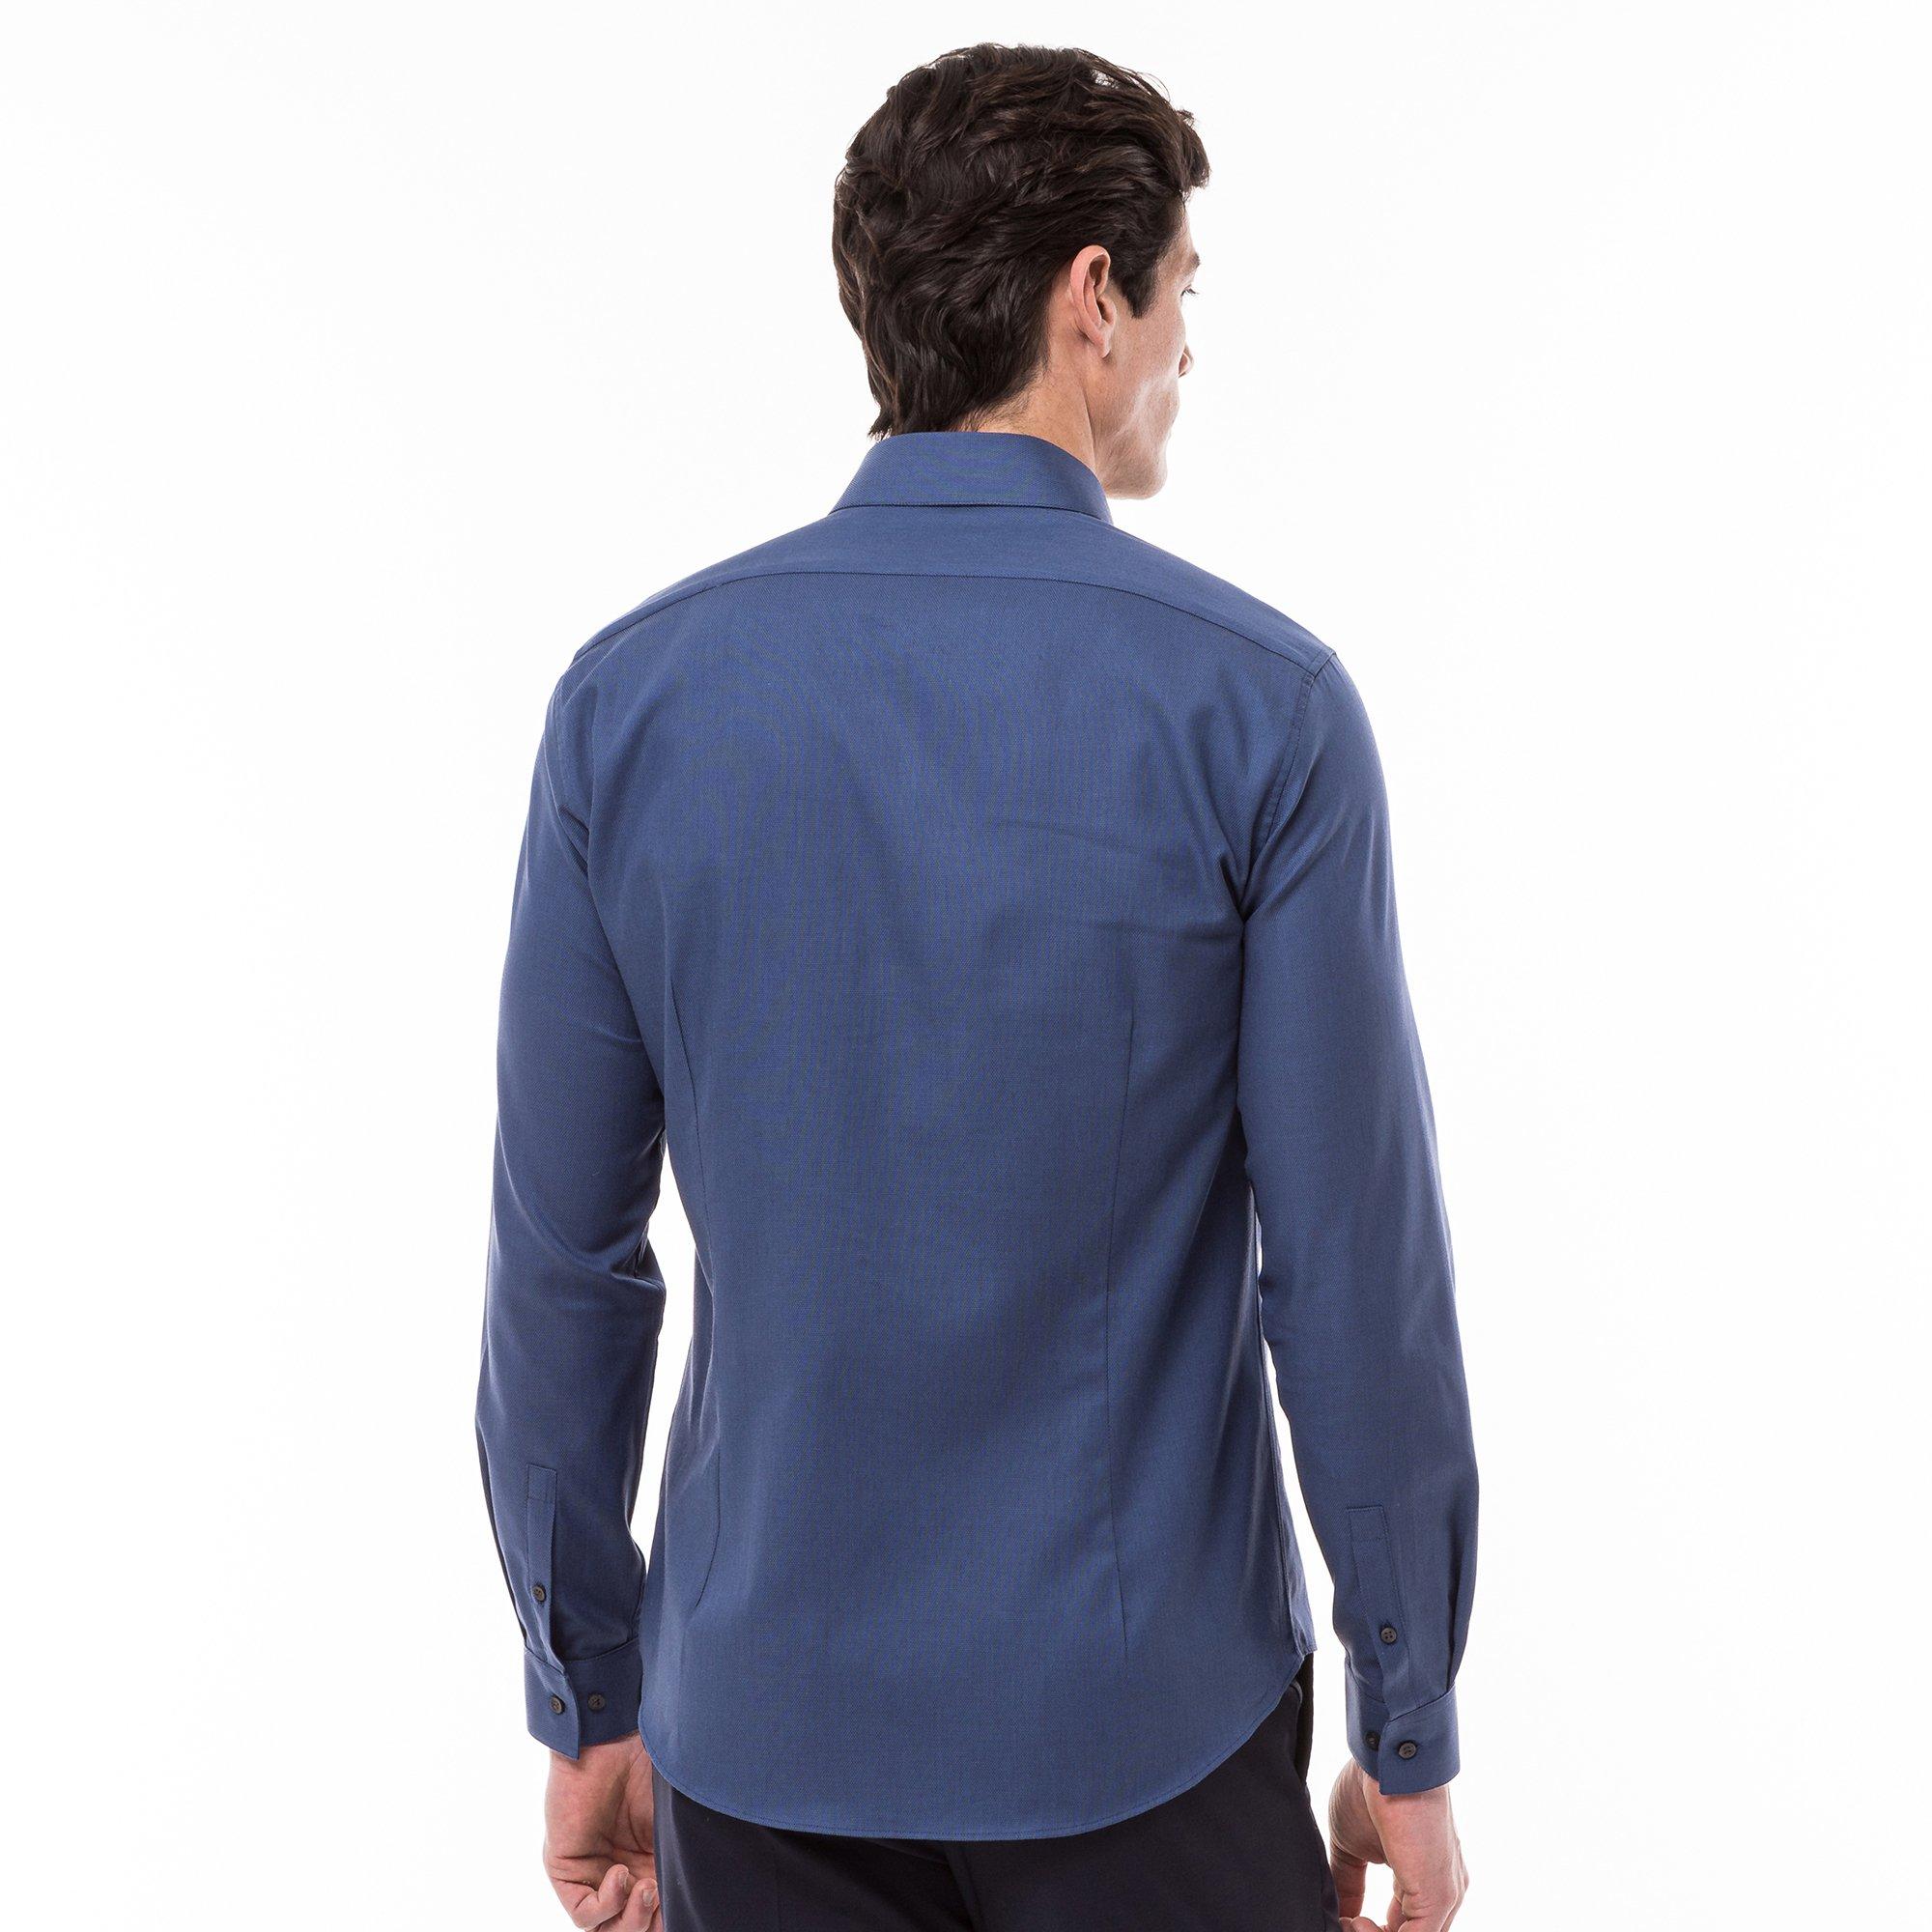 CALVIN KLEIN Hemden TONAL STRUCTURE SLIM SHIRT Hemd, Slim Fit, langarm 